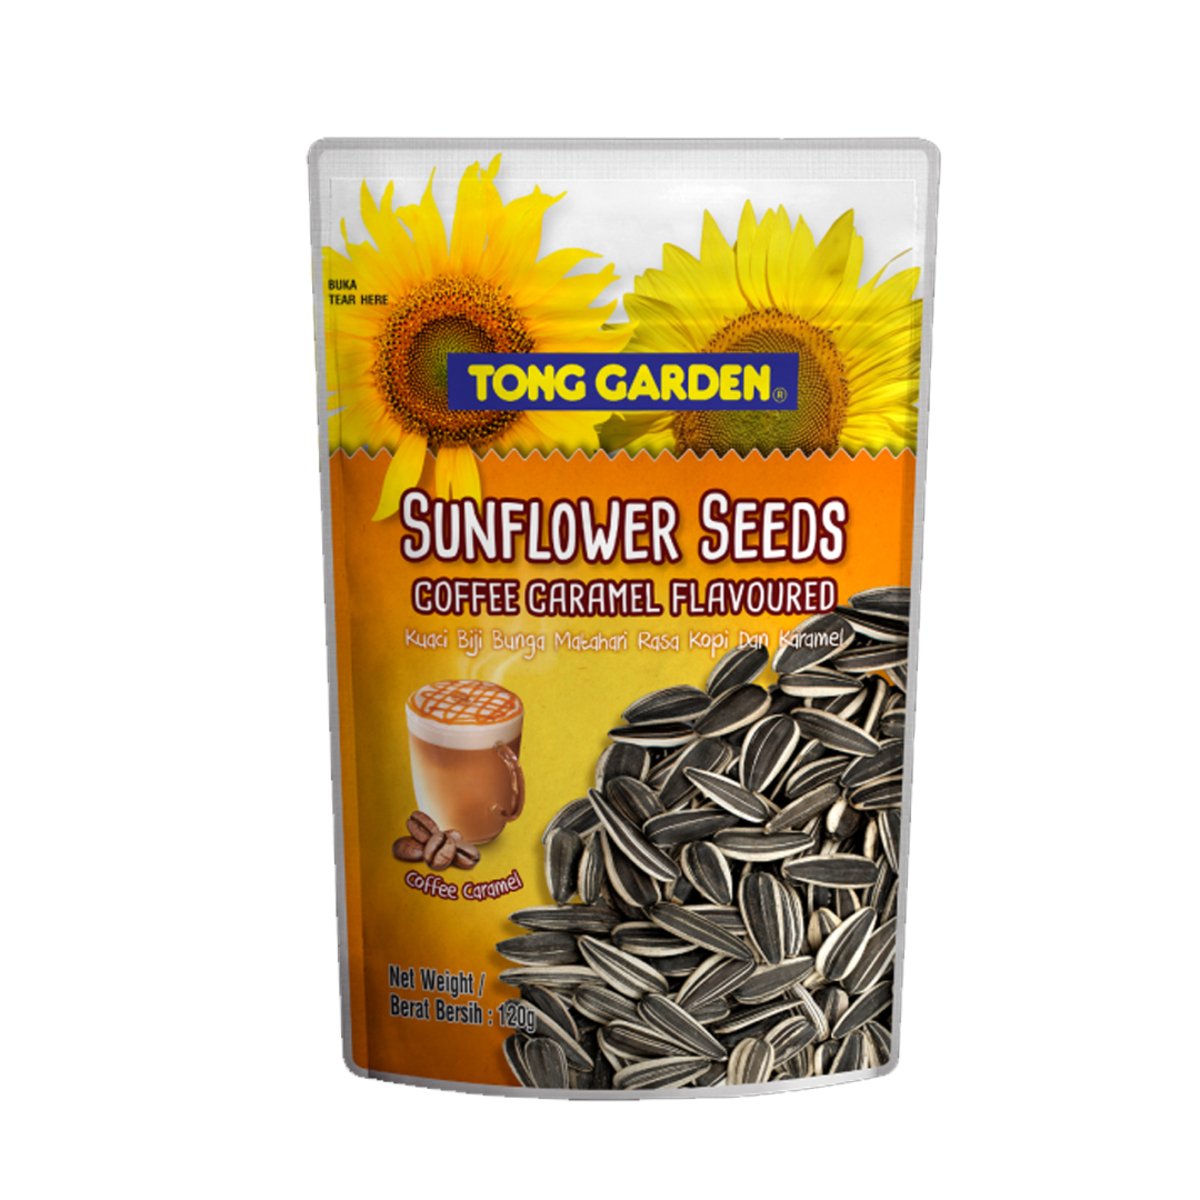 Tong Garden Sunflower Seed Coffee Caramel Flavoured 120g